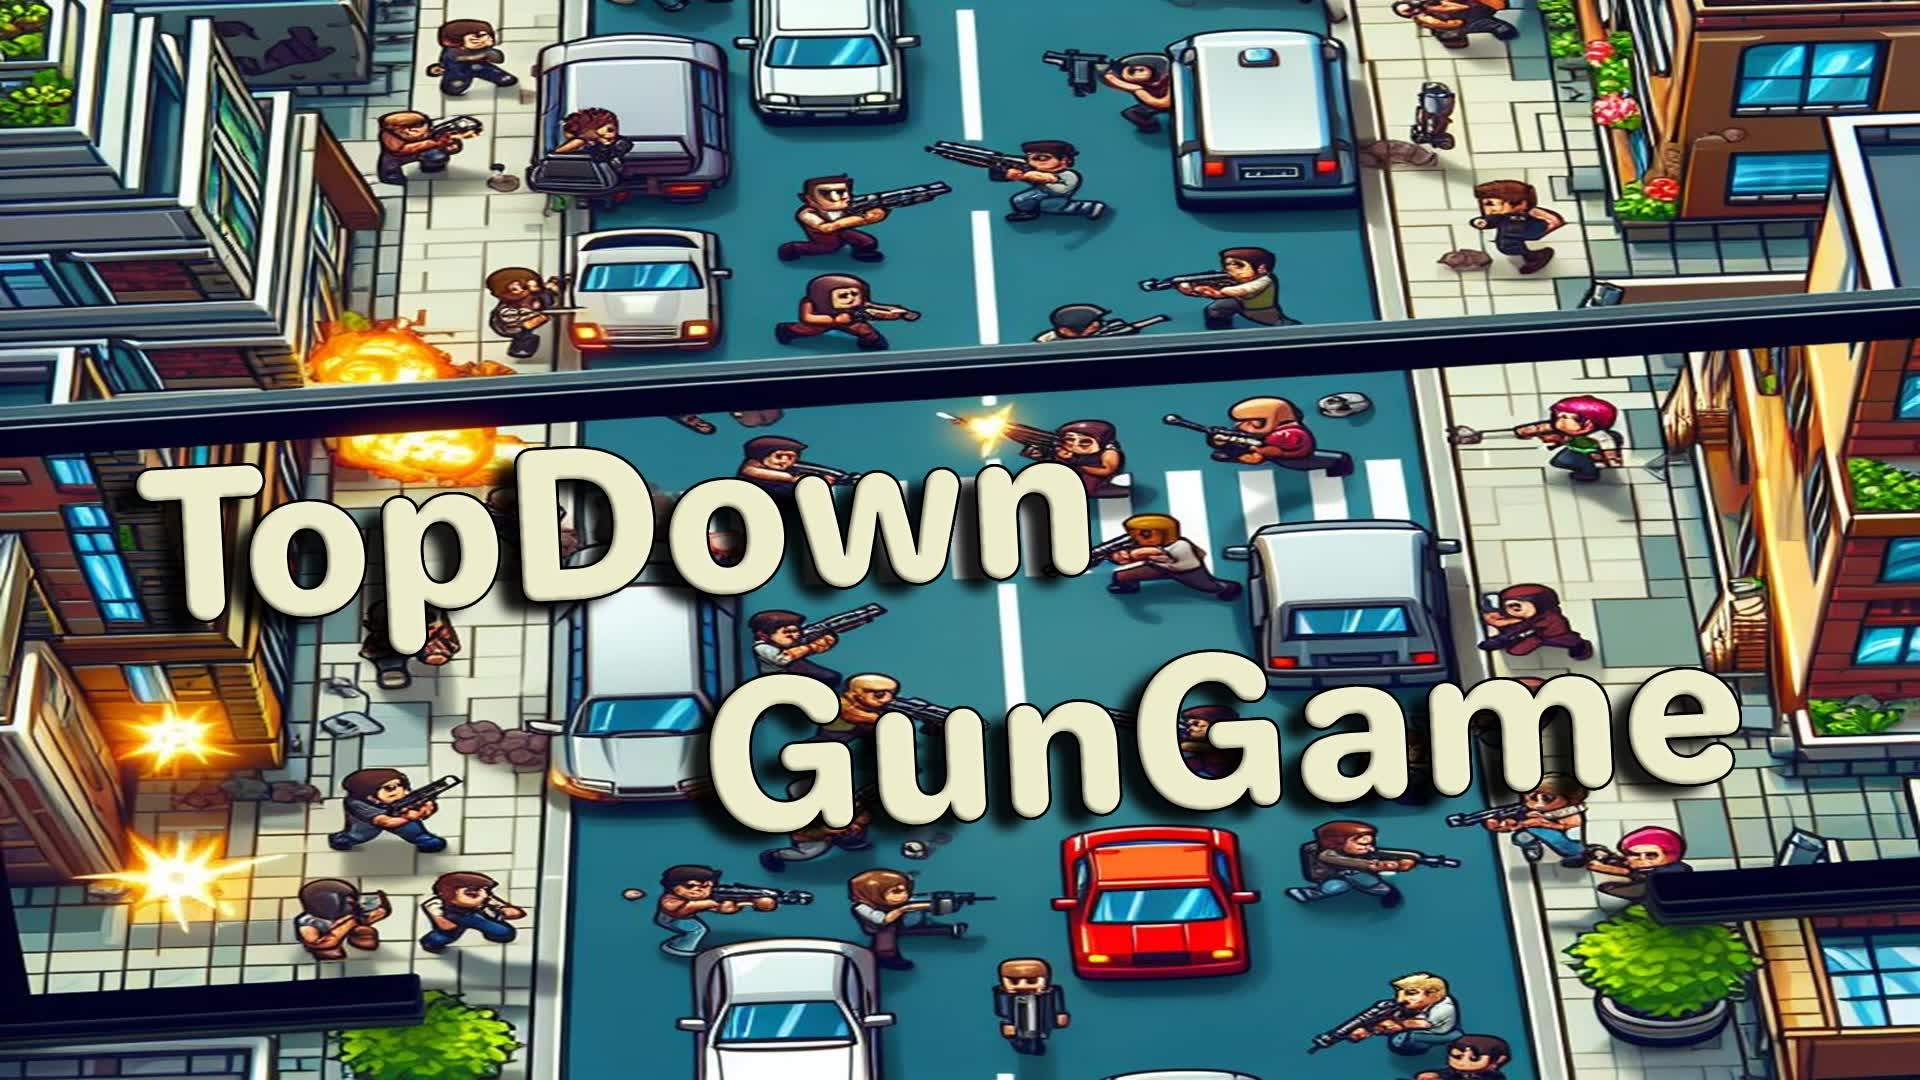 TopDown GunGame